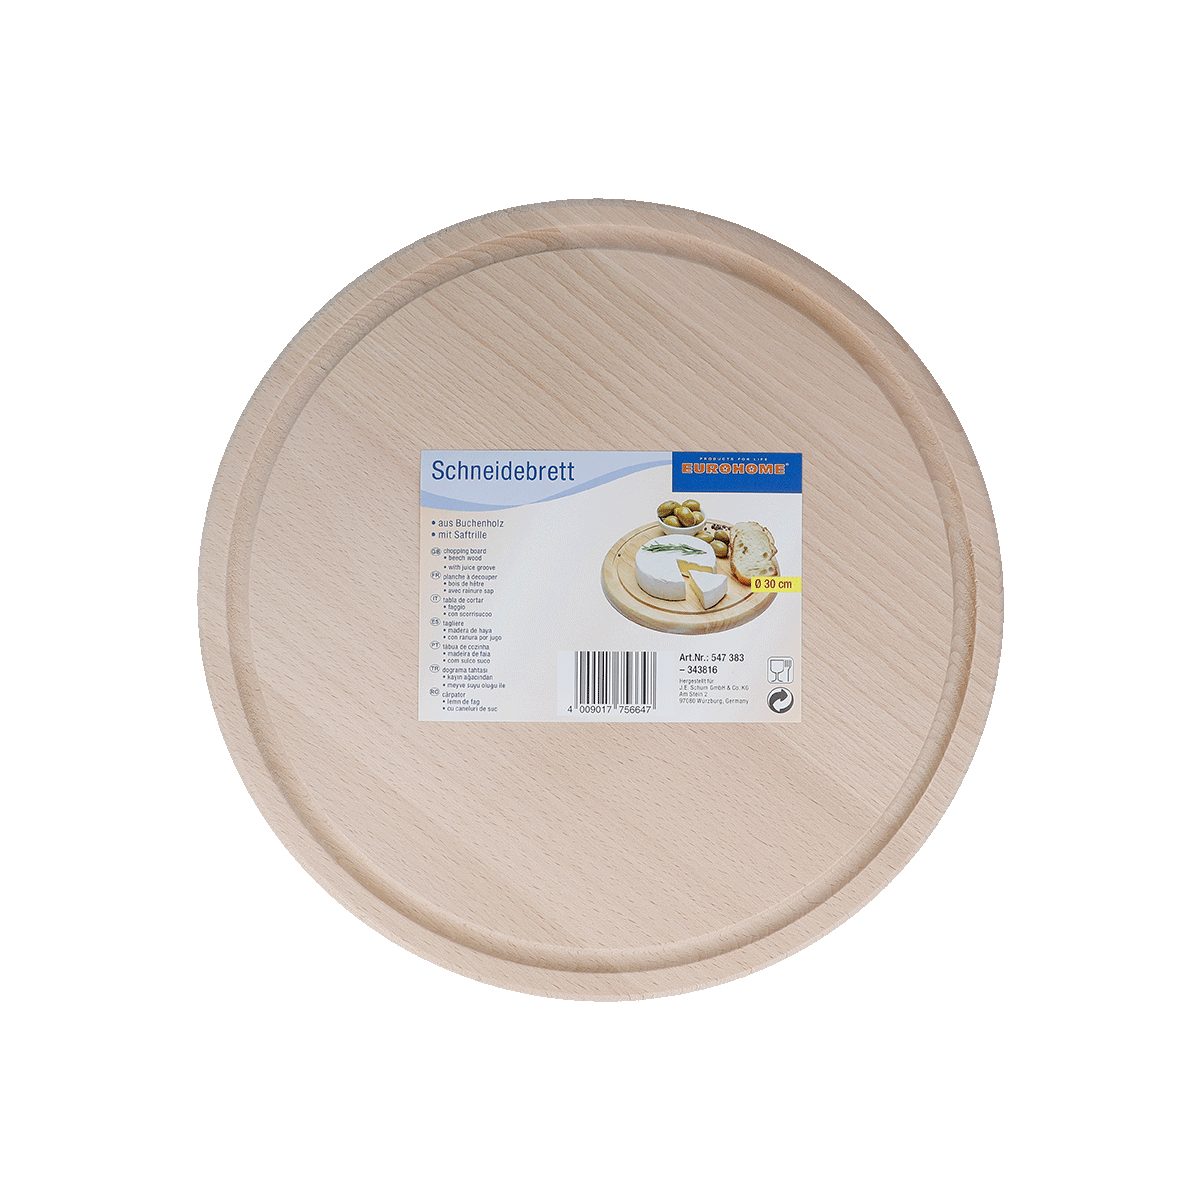 EUROHOME Brotschneidebrett Buchenholz Schneidebrett cm), mit Rillen, rund (Holzbrett Ø30 Frühstücksbrettchen Servierbrett Küche - Buchenholz